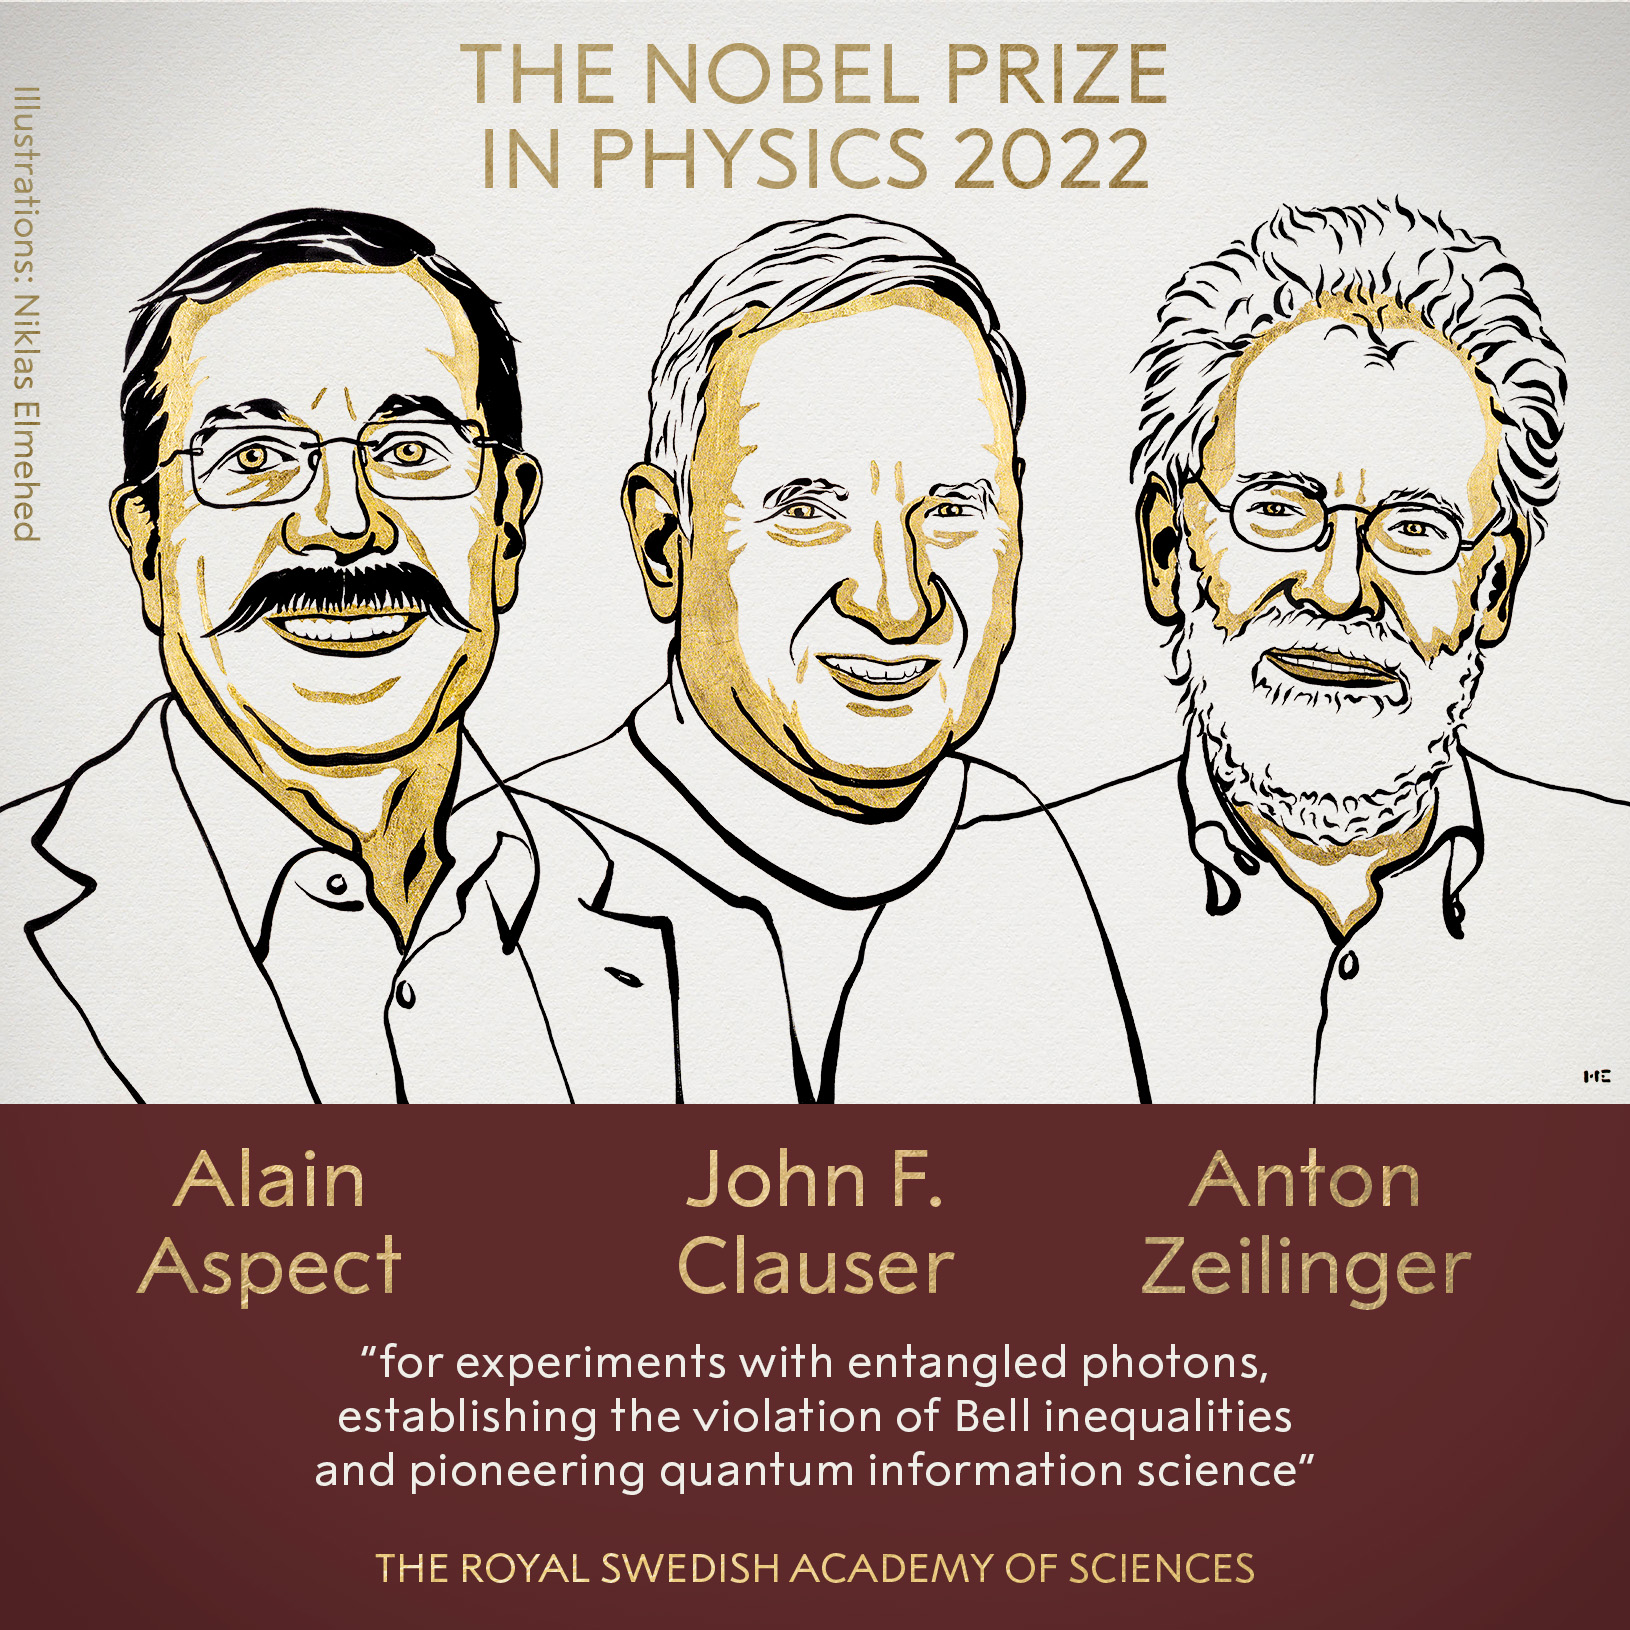 Ba nhà khoa học nhận giải Nobel Vật lý 2022. Ảnh: Nobel Prize